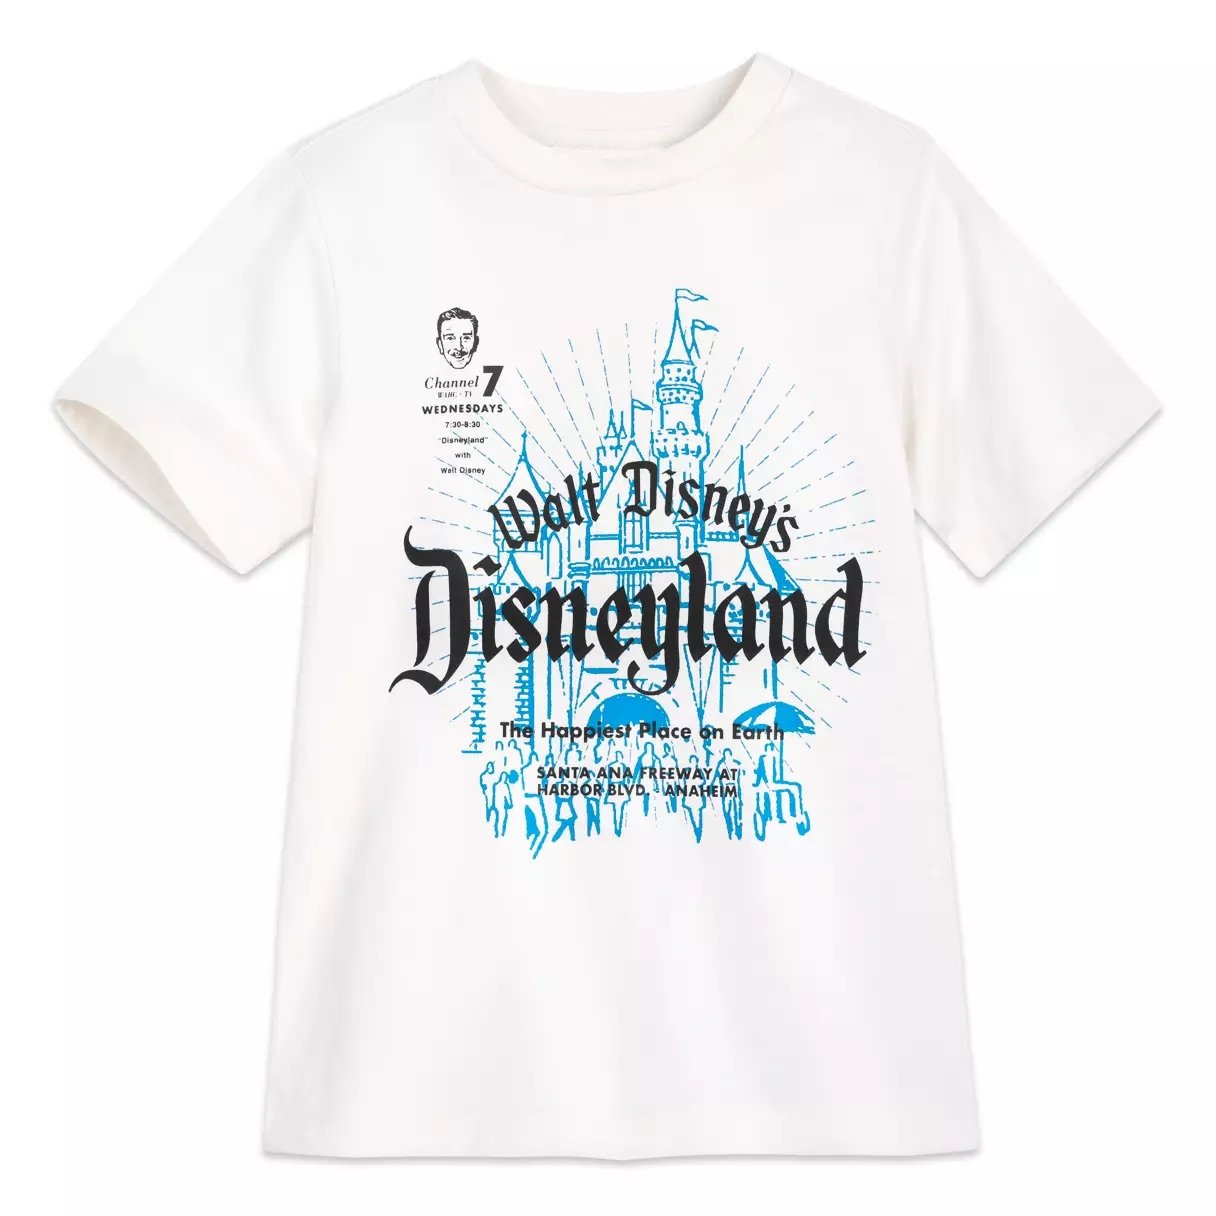 NEW! 2023 Merchandise Collection Arrives at Disneyland and Walt Disney World